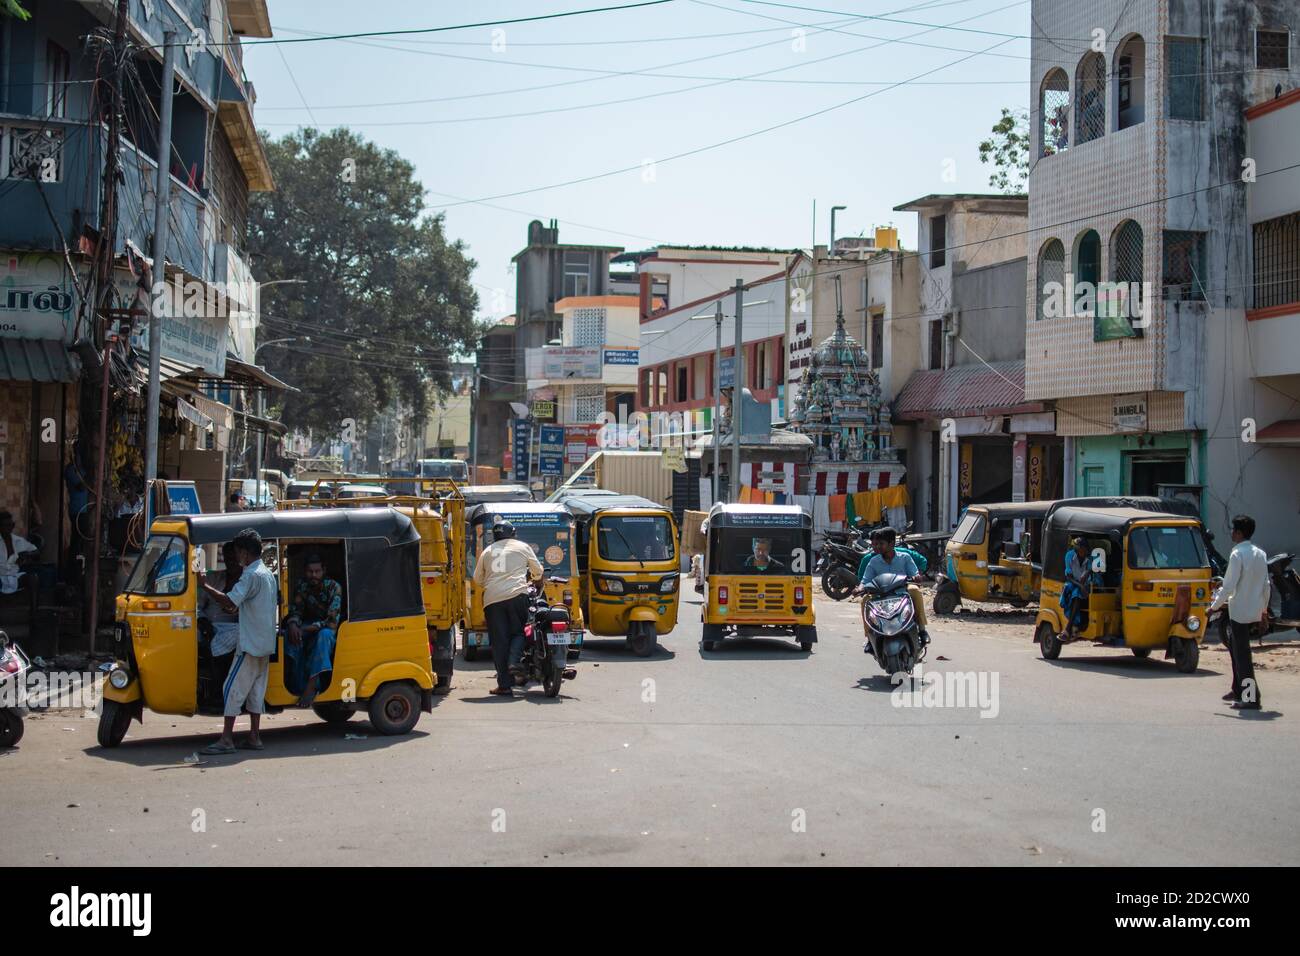 Chennai, India - February 8, 2020: Traffic with many traditional yellow taxi auto rickshaws on a street on February 8, 2020 in Chennai, India Stock Photo